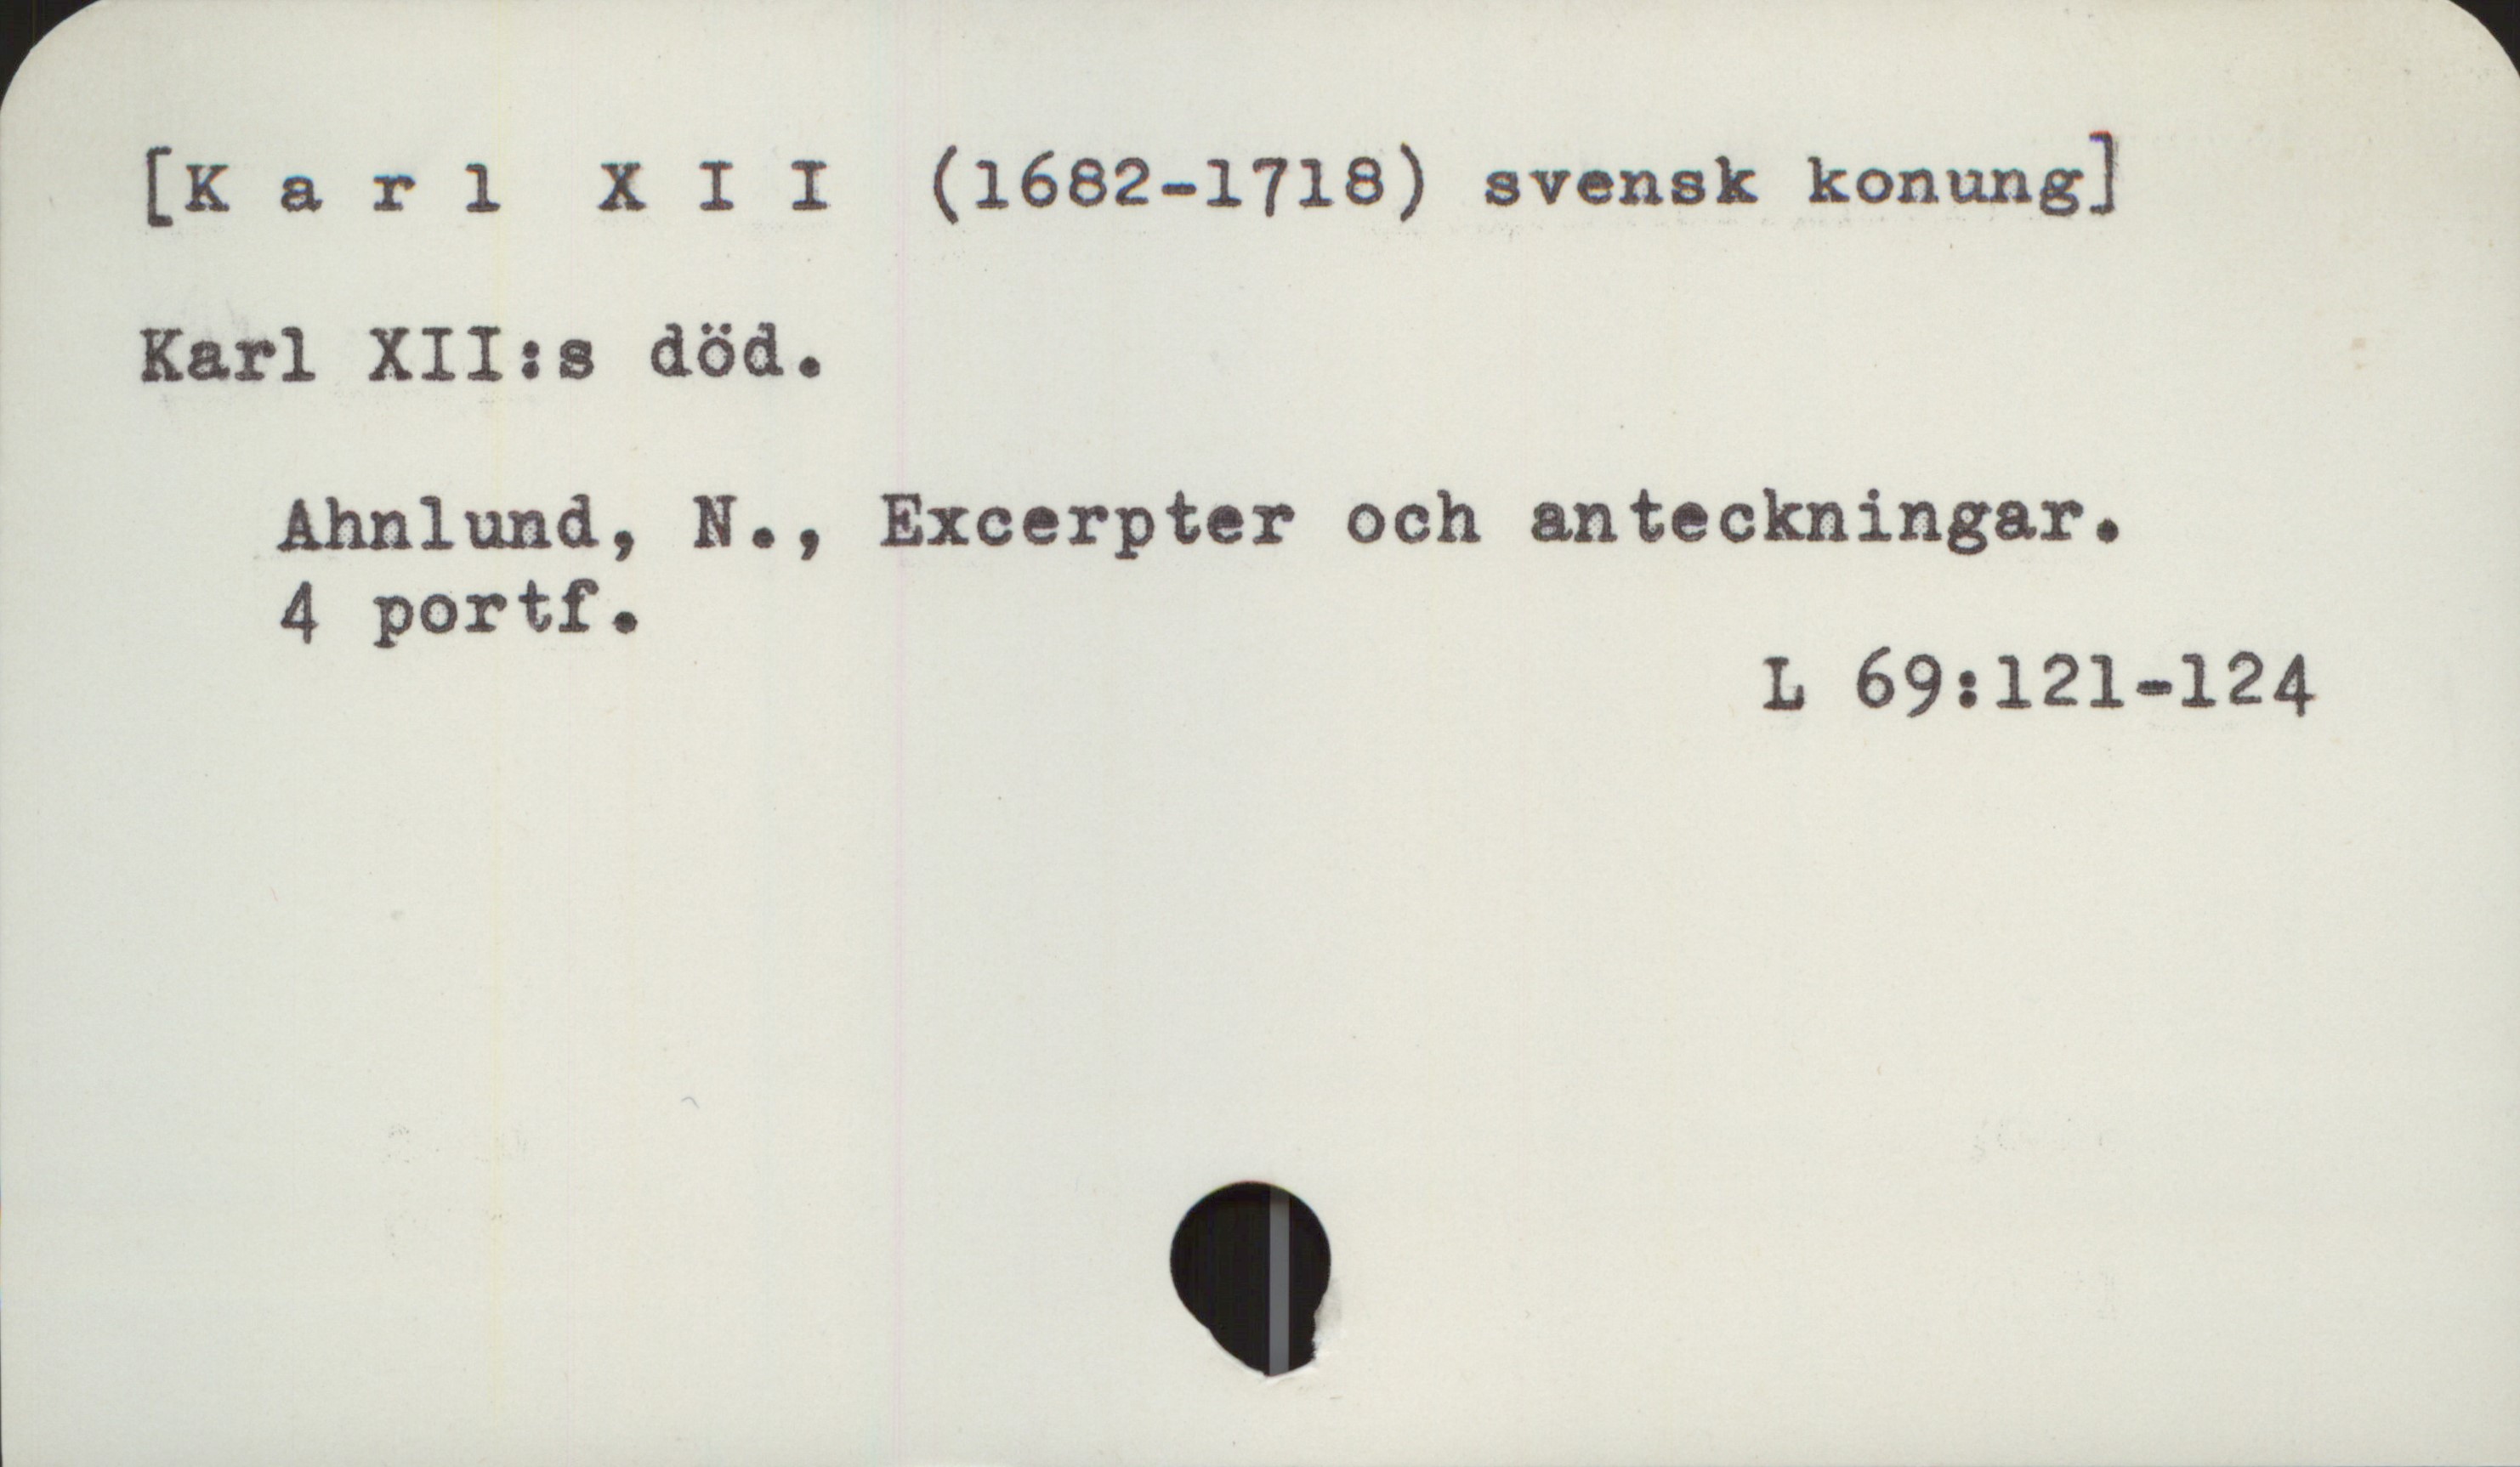  [Karl X I I (1682-1718) svensk konung]
Karl XII:s död.
Ahnlund, N., Excerpter och anteckningar.
4 portf.
L 69:121-124

